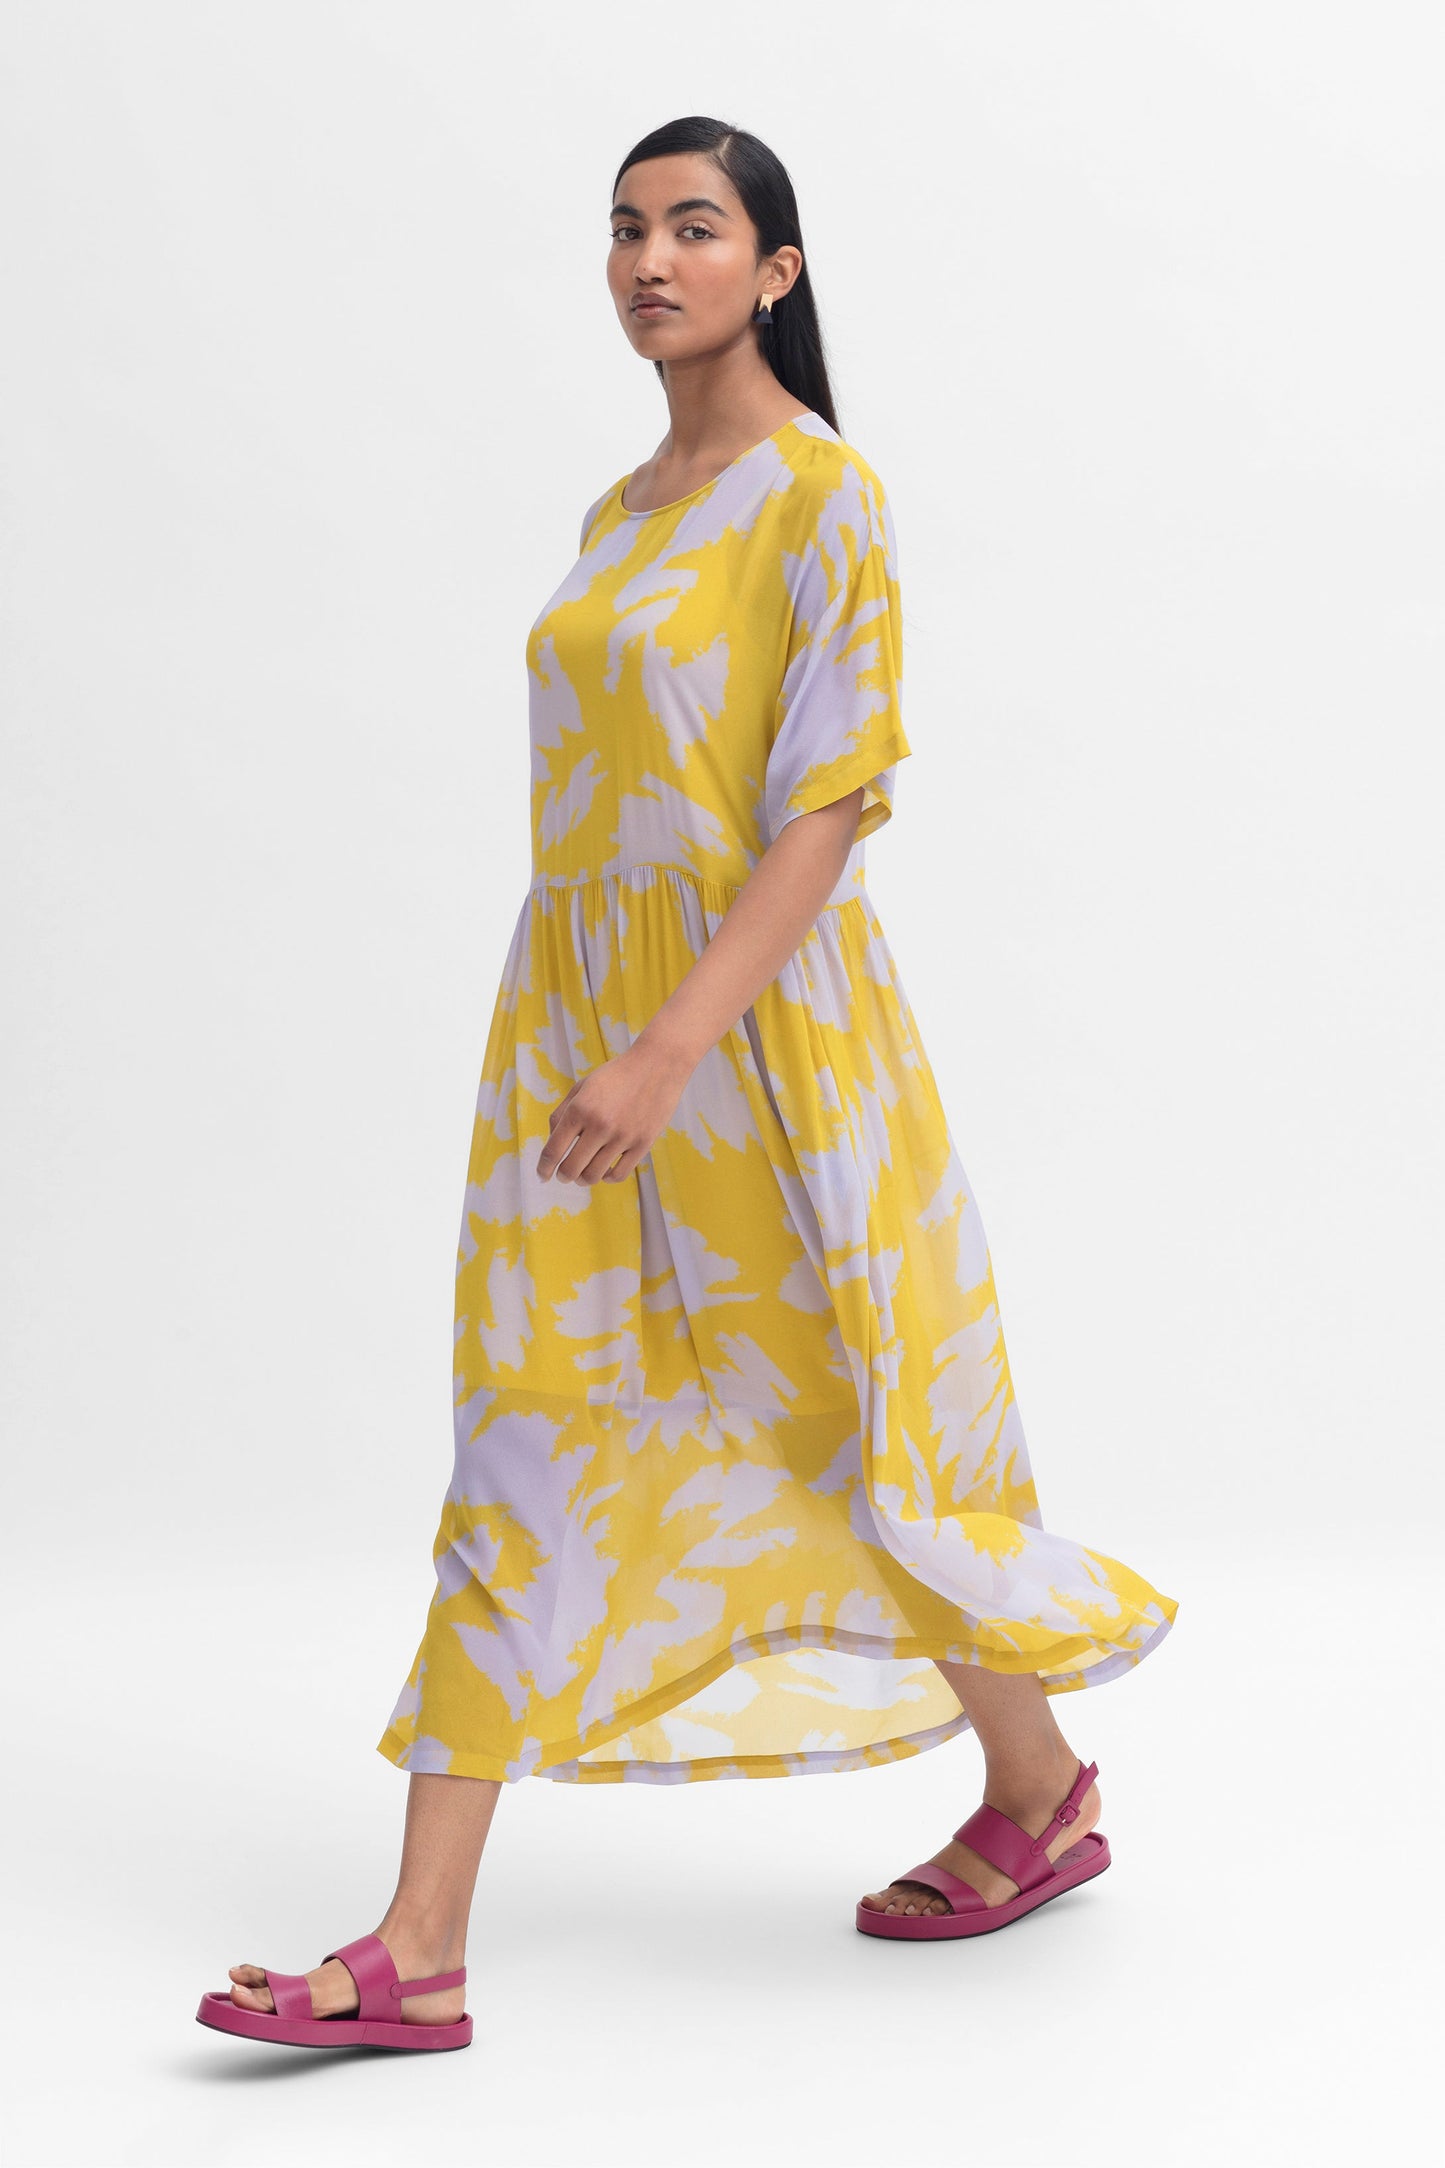 Ravnen Print Sheer Dress and Slip Model Side Walking | SAFFRON NAEMI PRINT